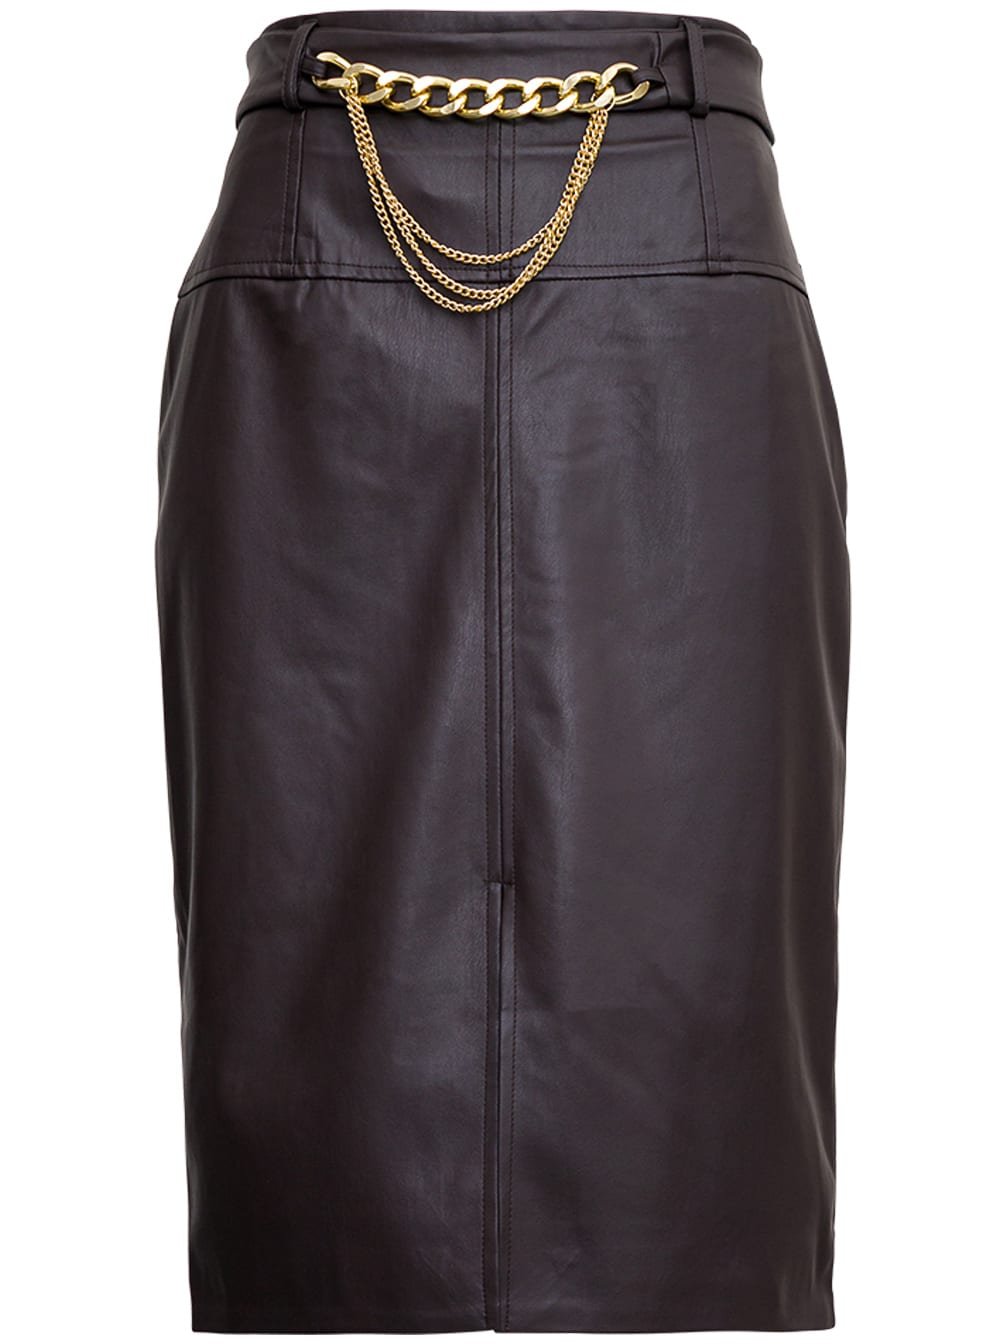 Liu-Jo Longuette Leatheret Skirt With Chain Belt Detail